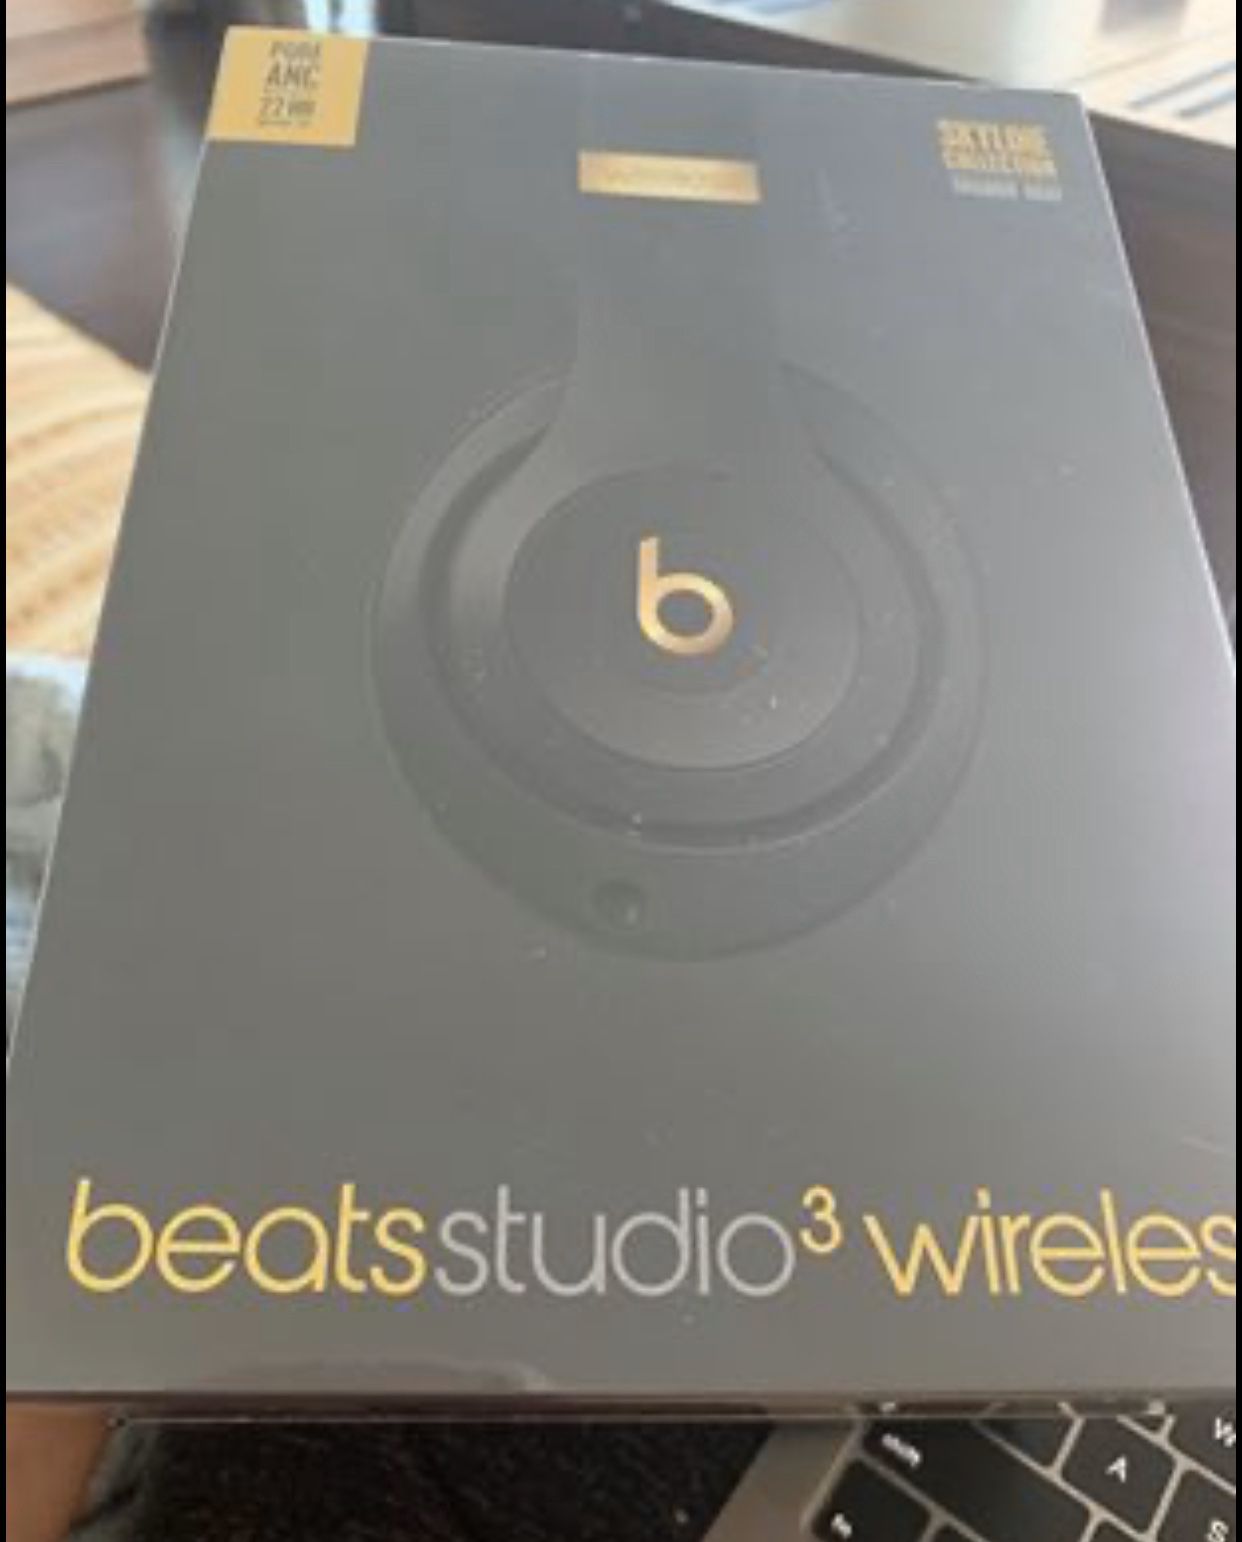 Brand new beats studio 3 wireless headphones